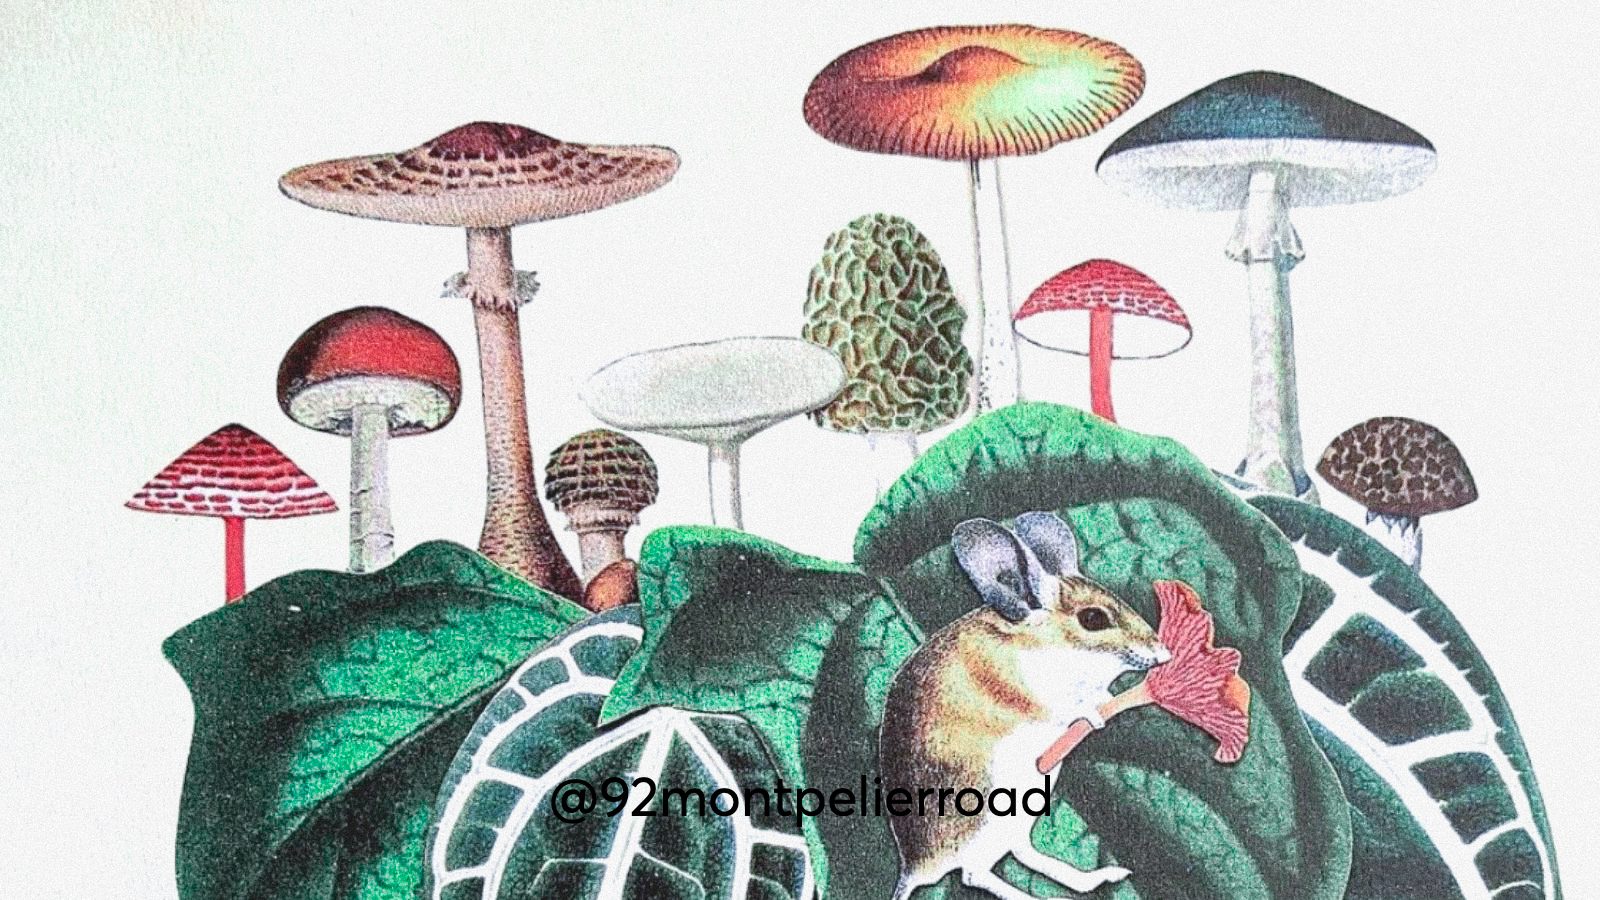 A magic mushroom collage art depicing a mouse on a leaf below magic mushrooms